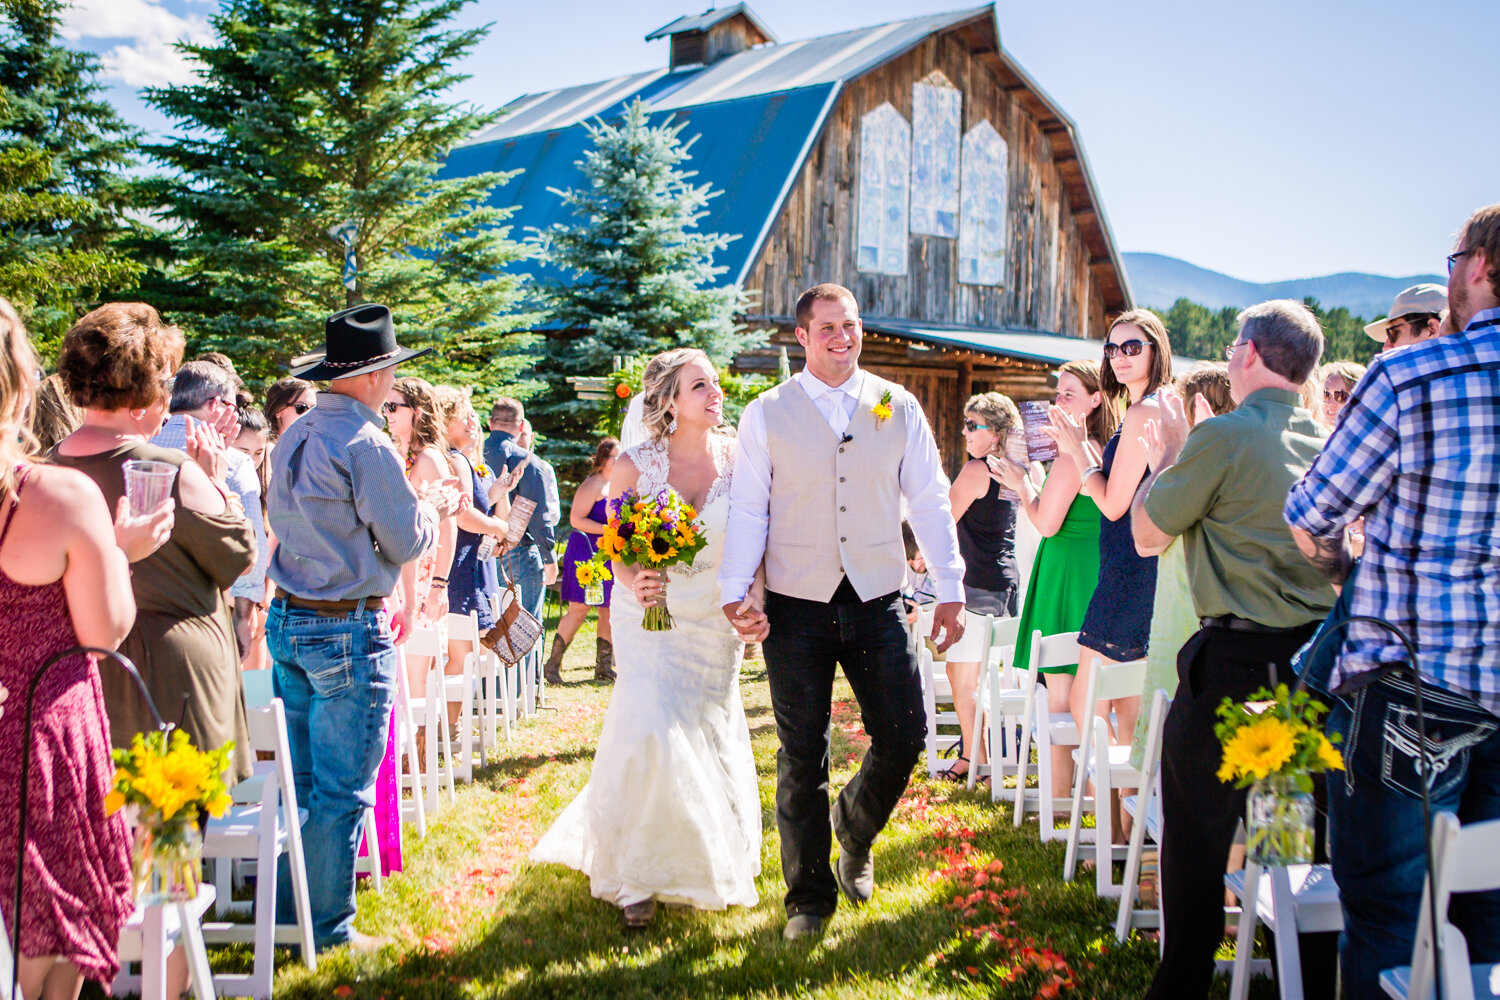  Wedding at The barn at Evergreen Memorial. Photographed by JMGant Photography. 